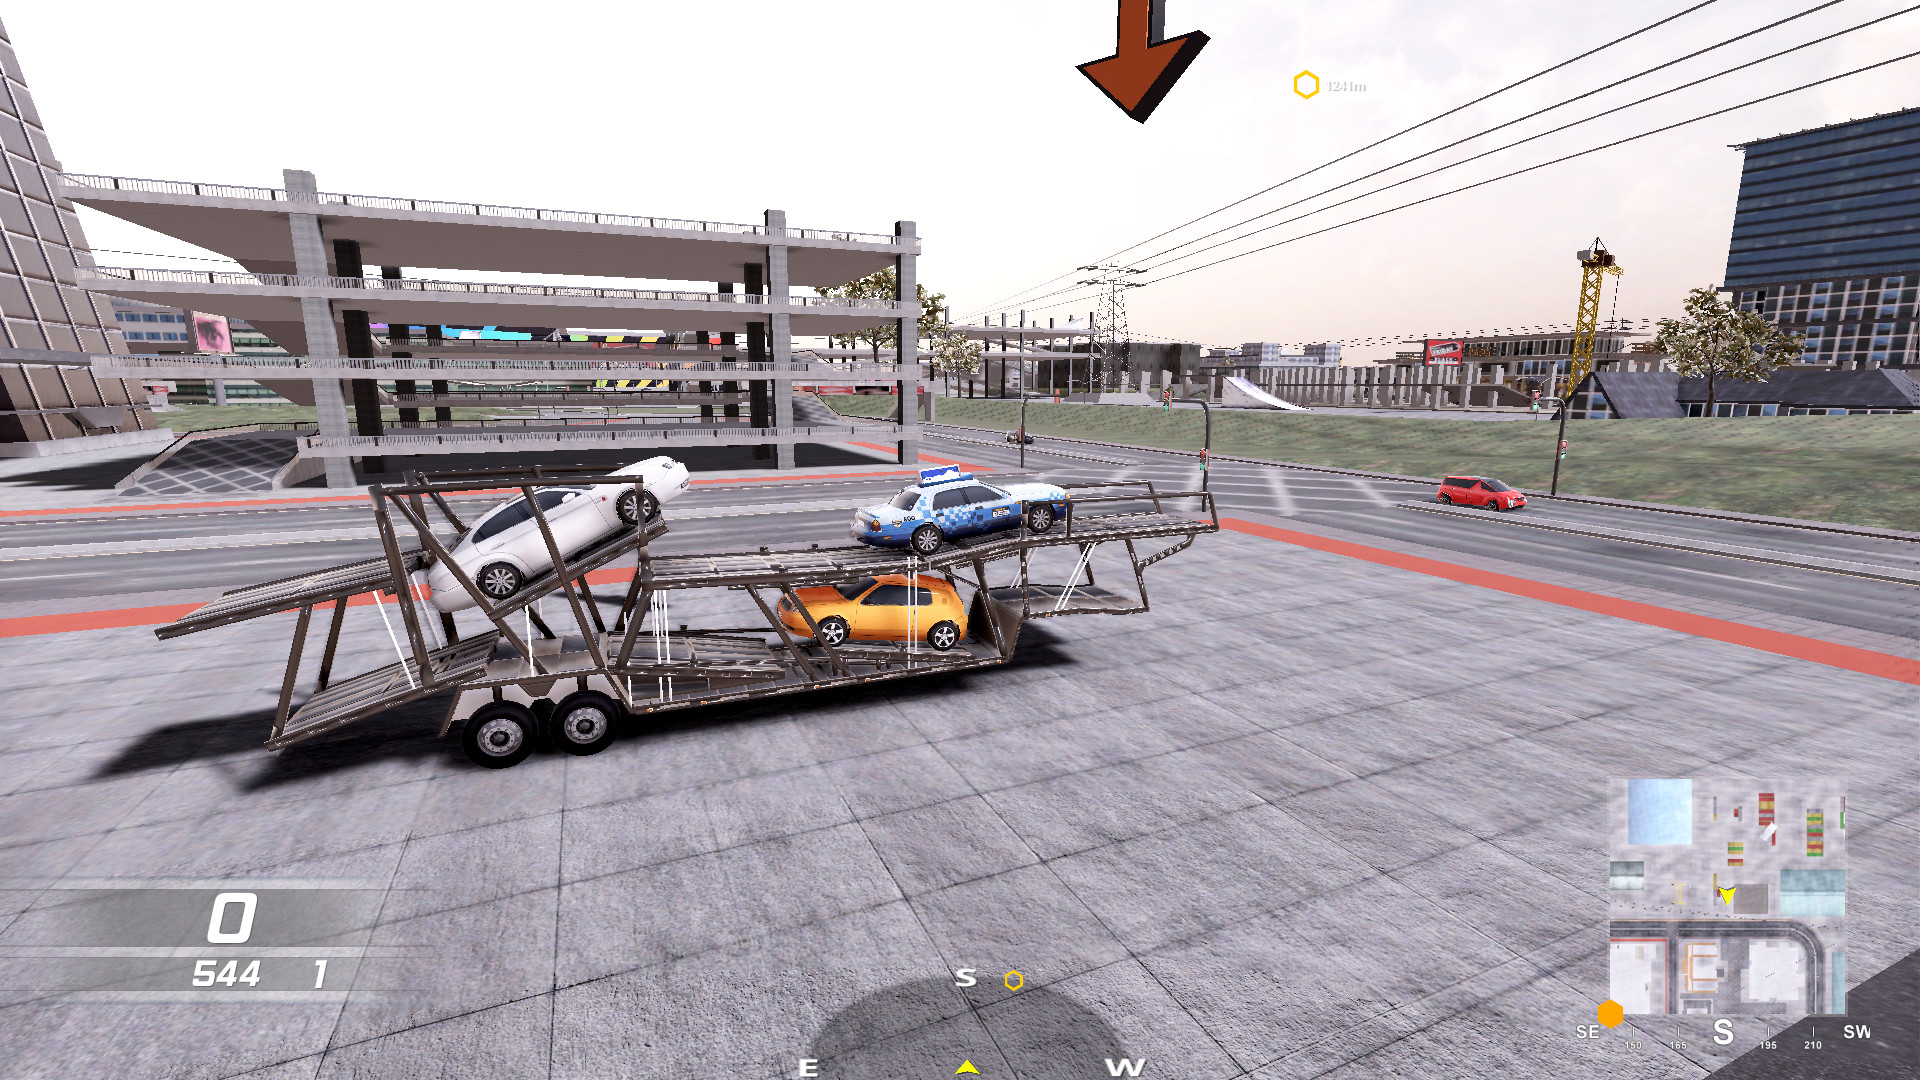 Truck Simulator in City Free Download